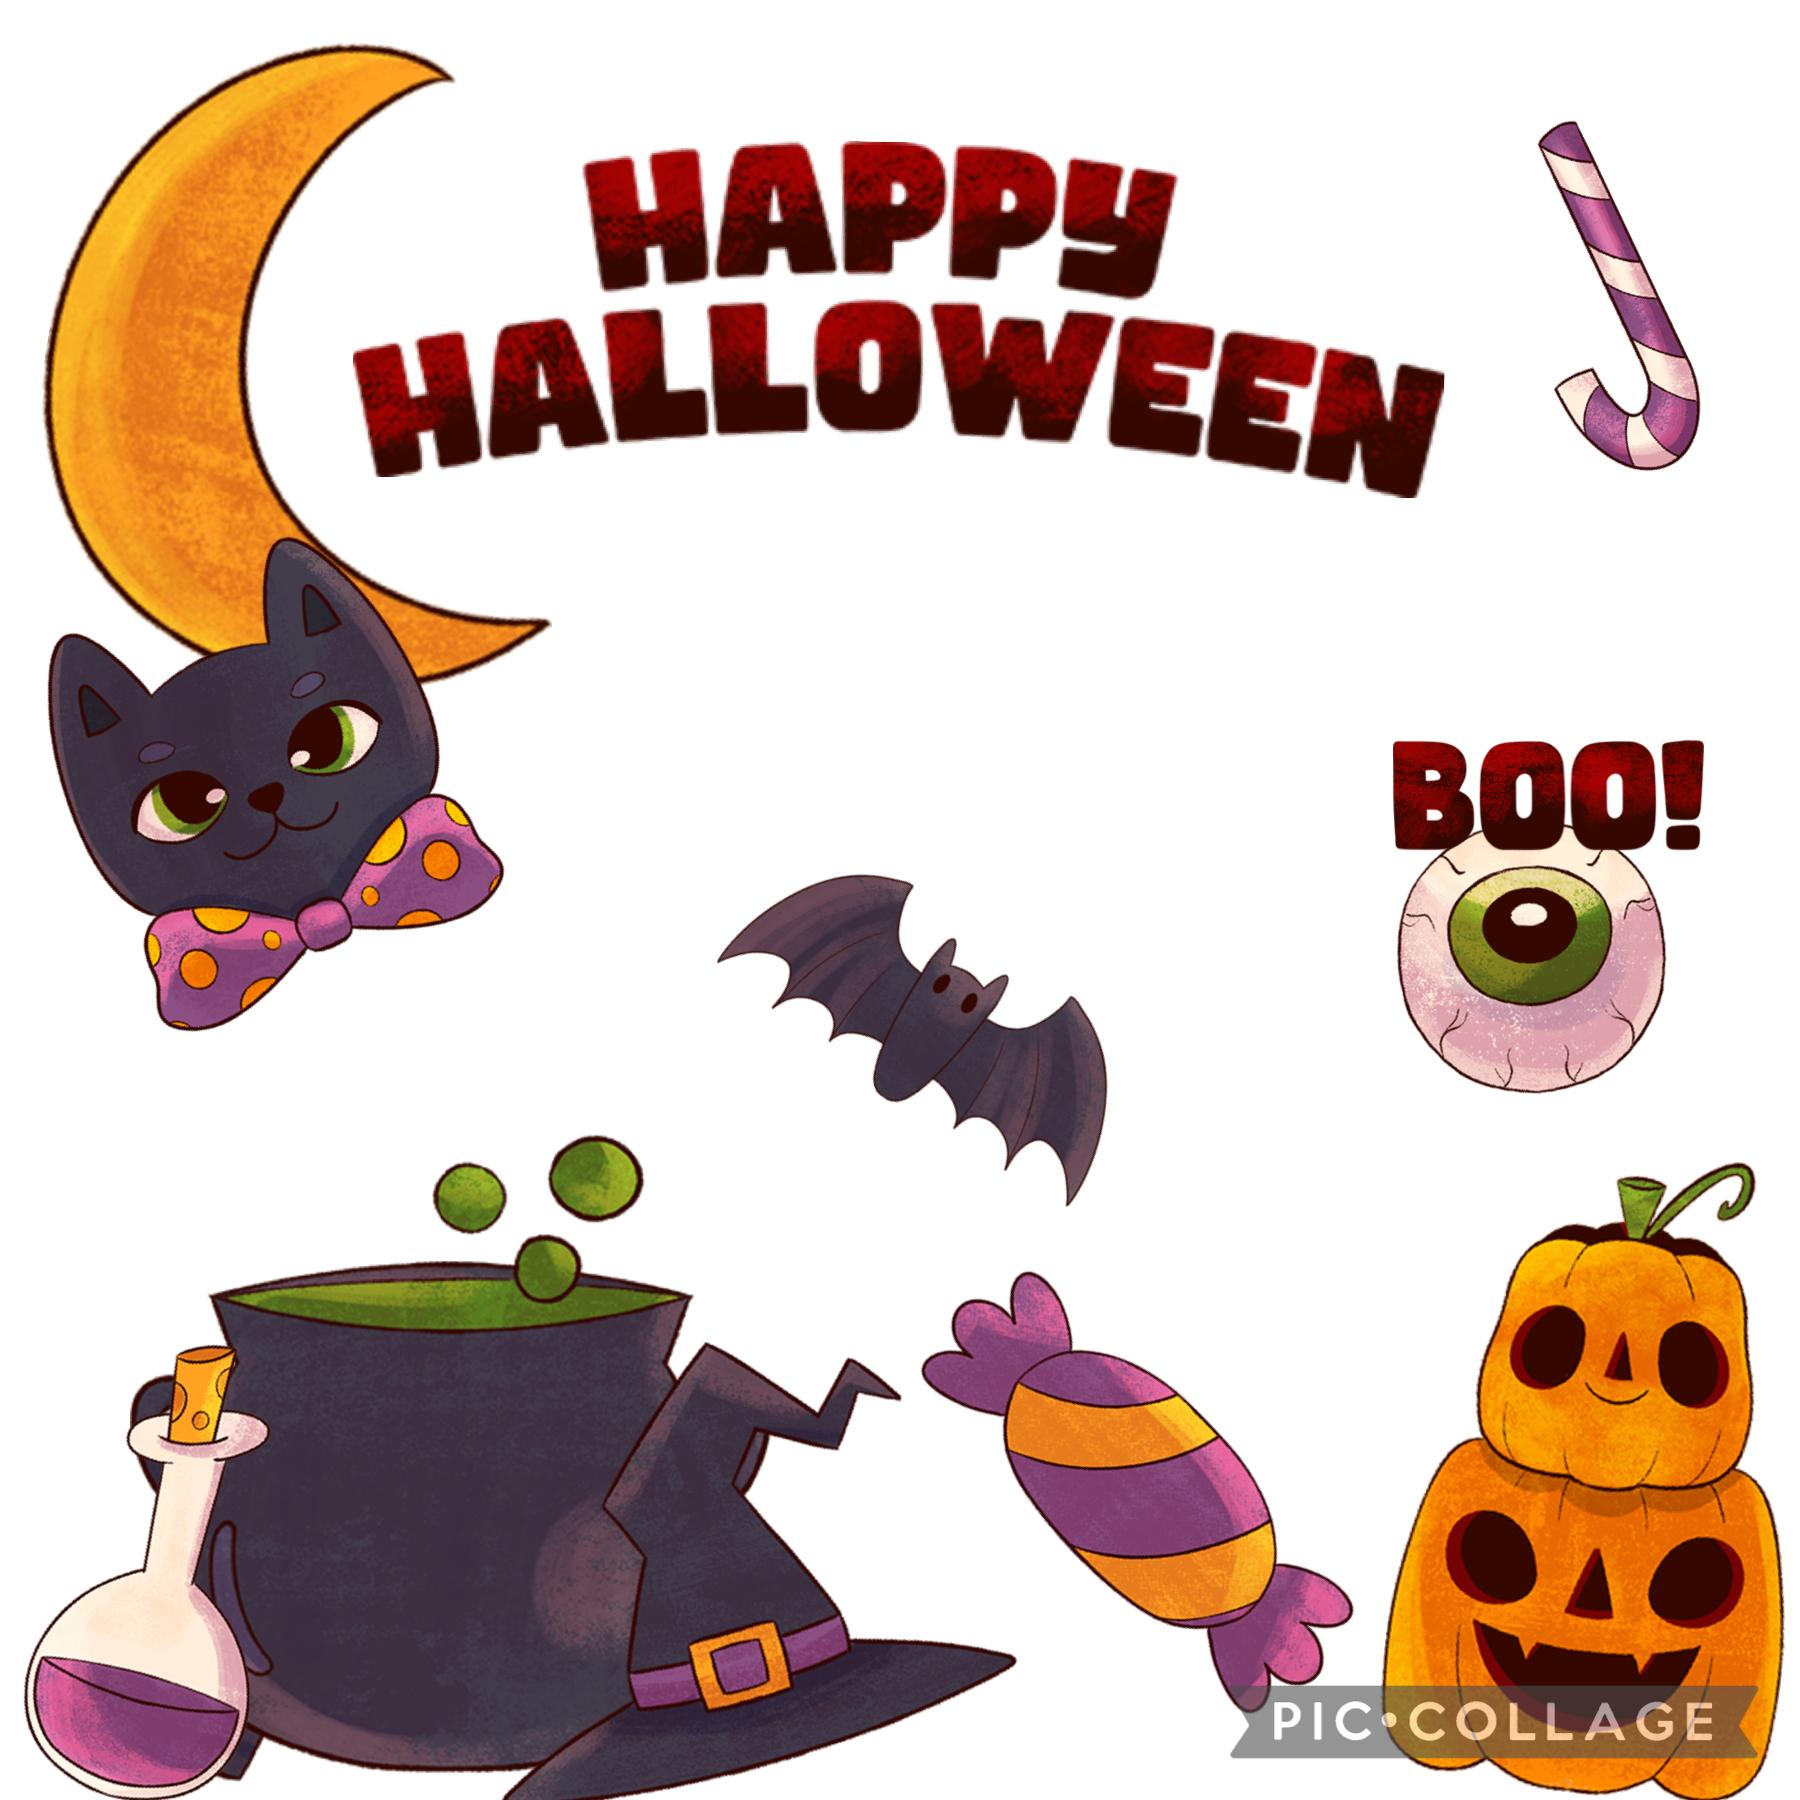 Happy Halloween 🎃 👻 